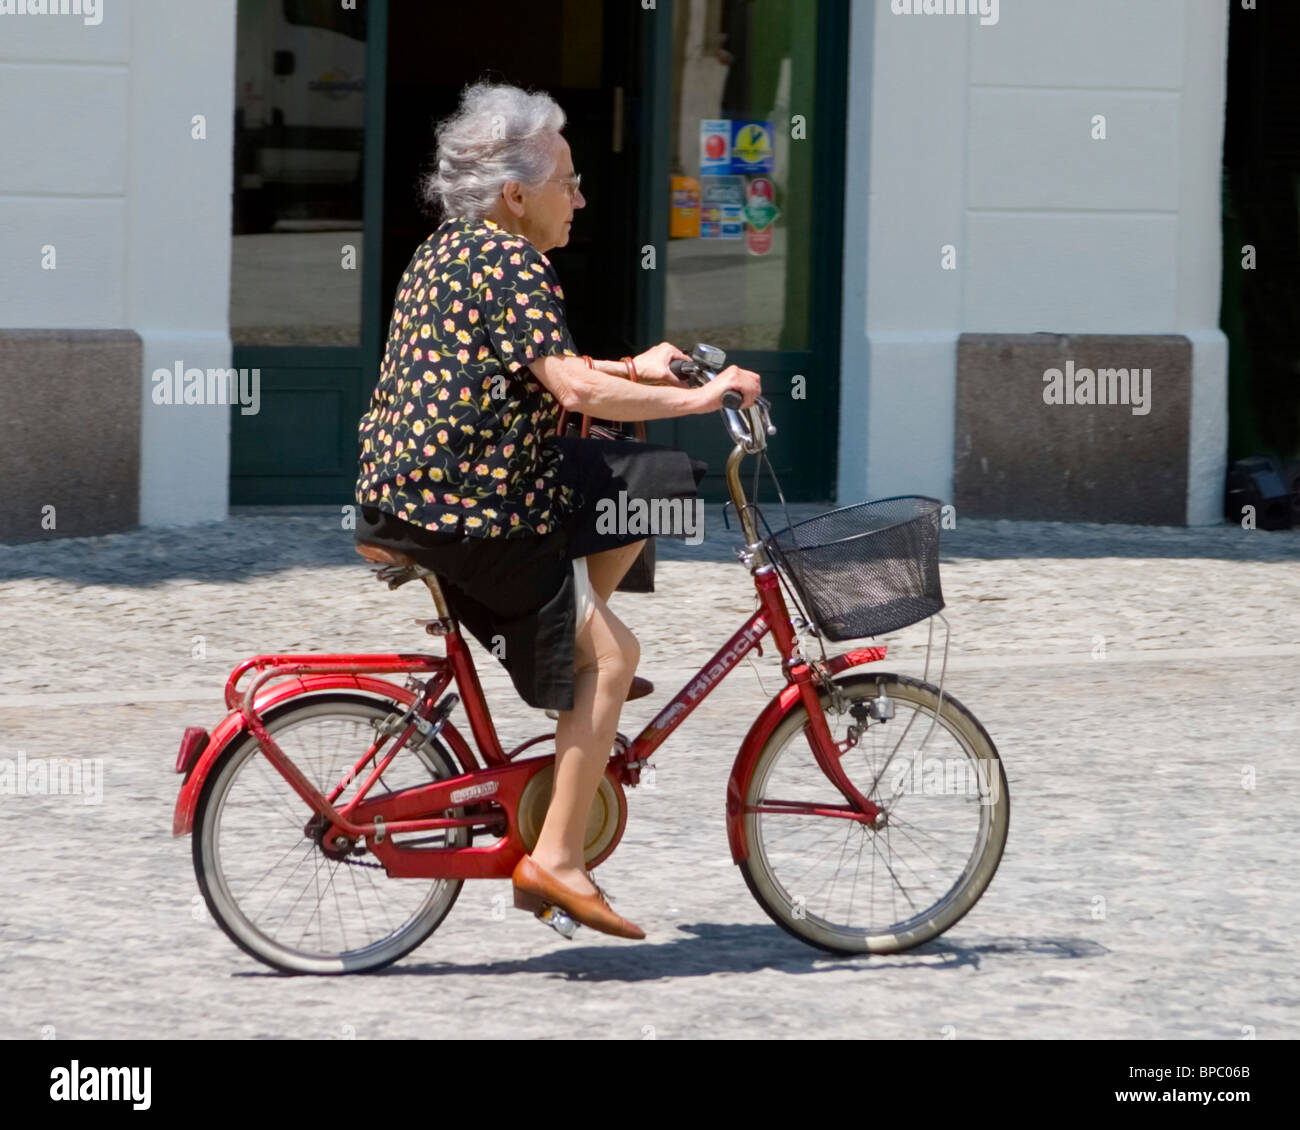 old lady on bike